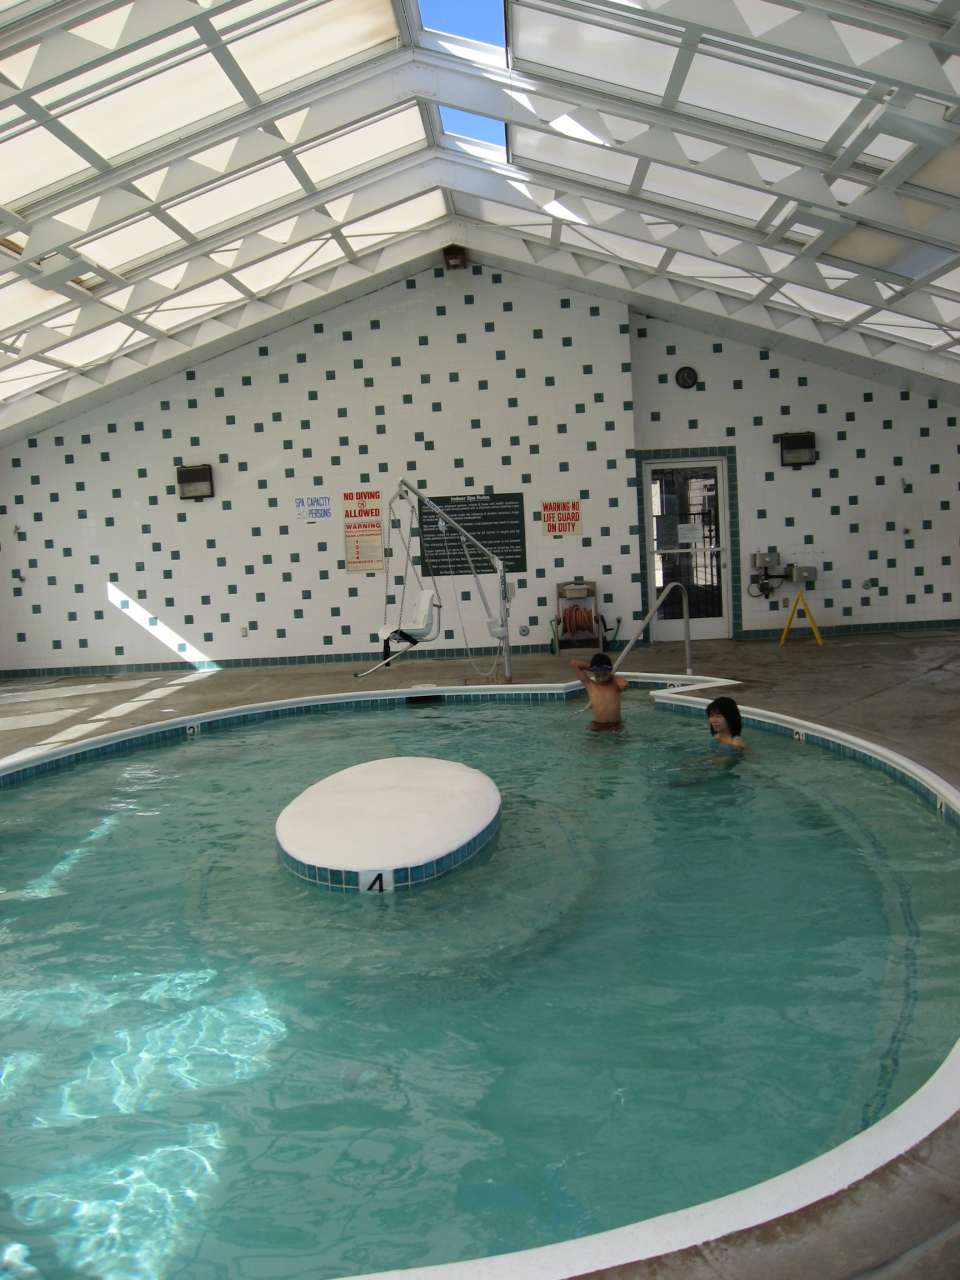 The Agua Caliente hot spring SPA